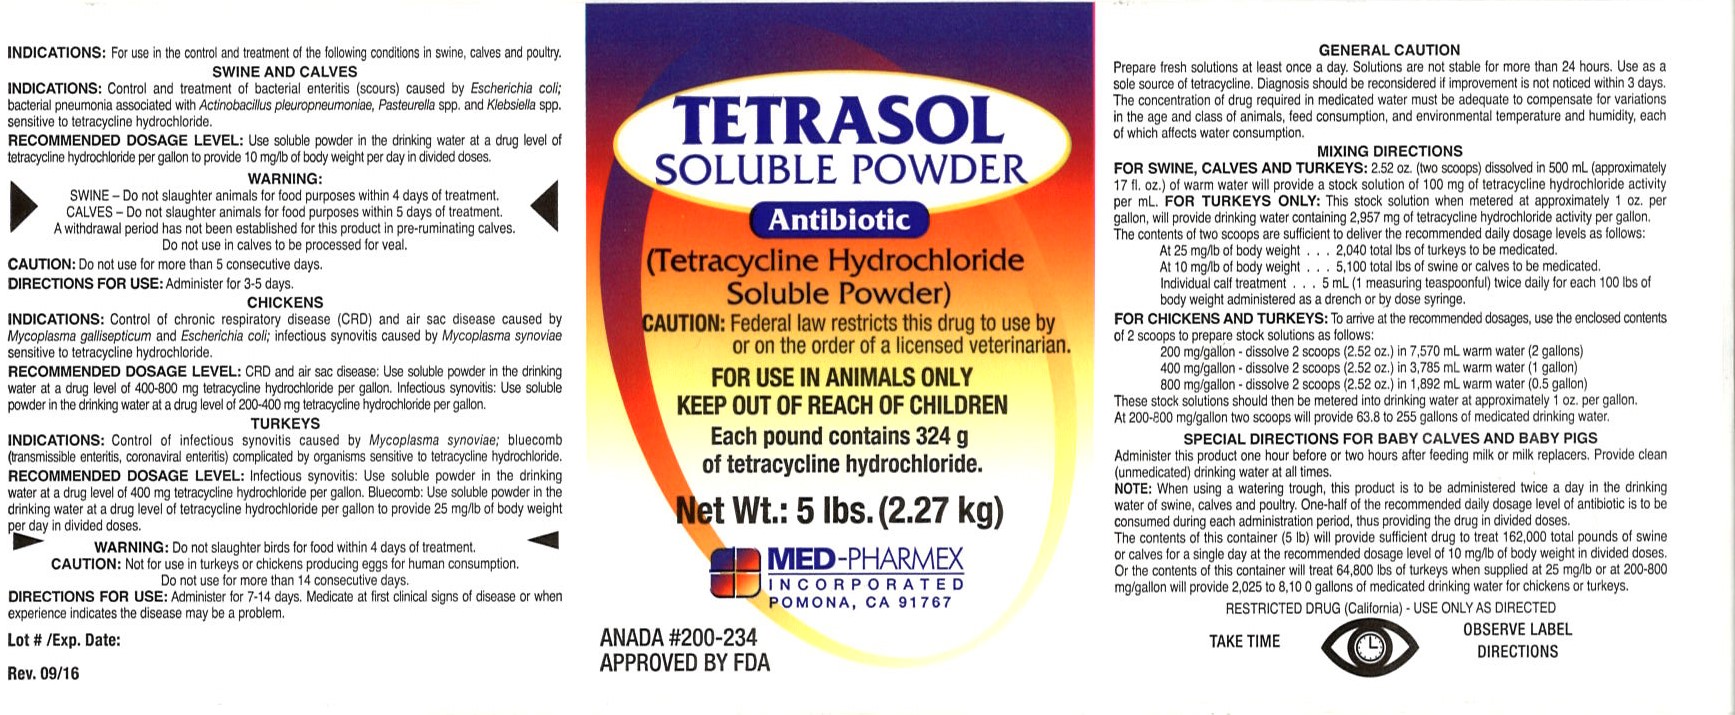 Tetrasol Soluble Powder 5lbs. label